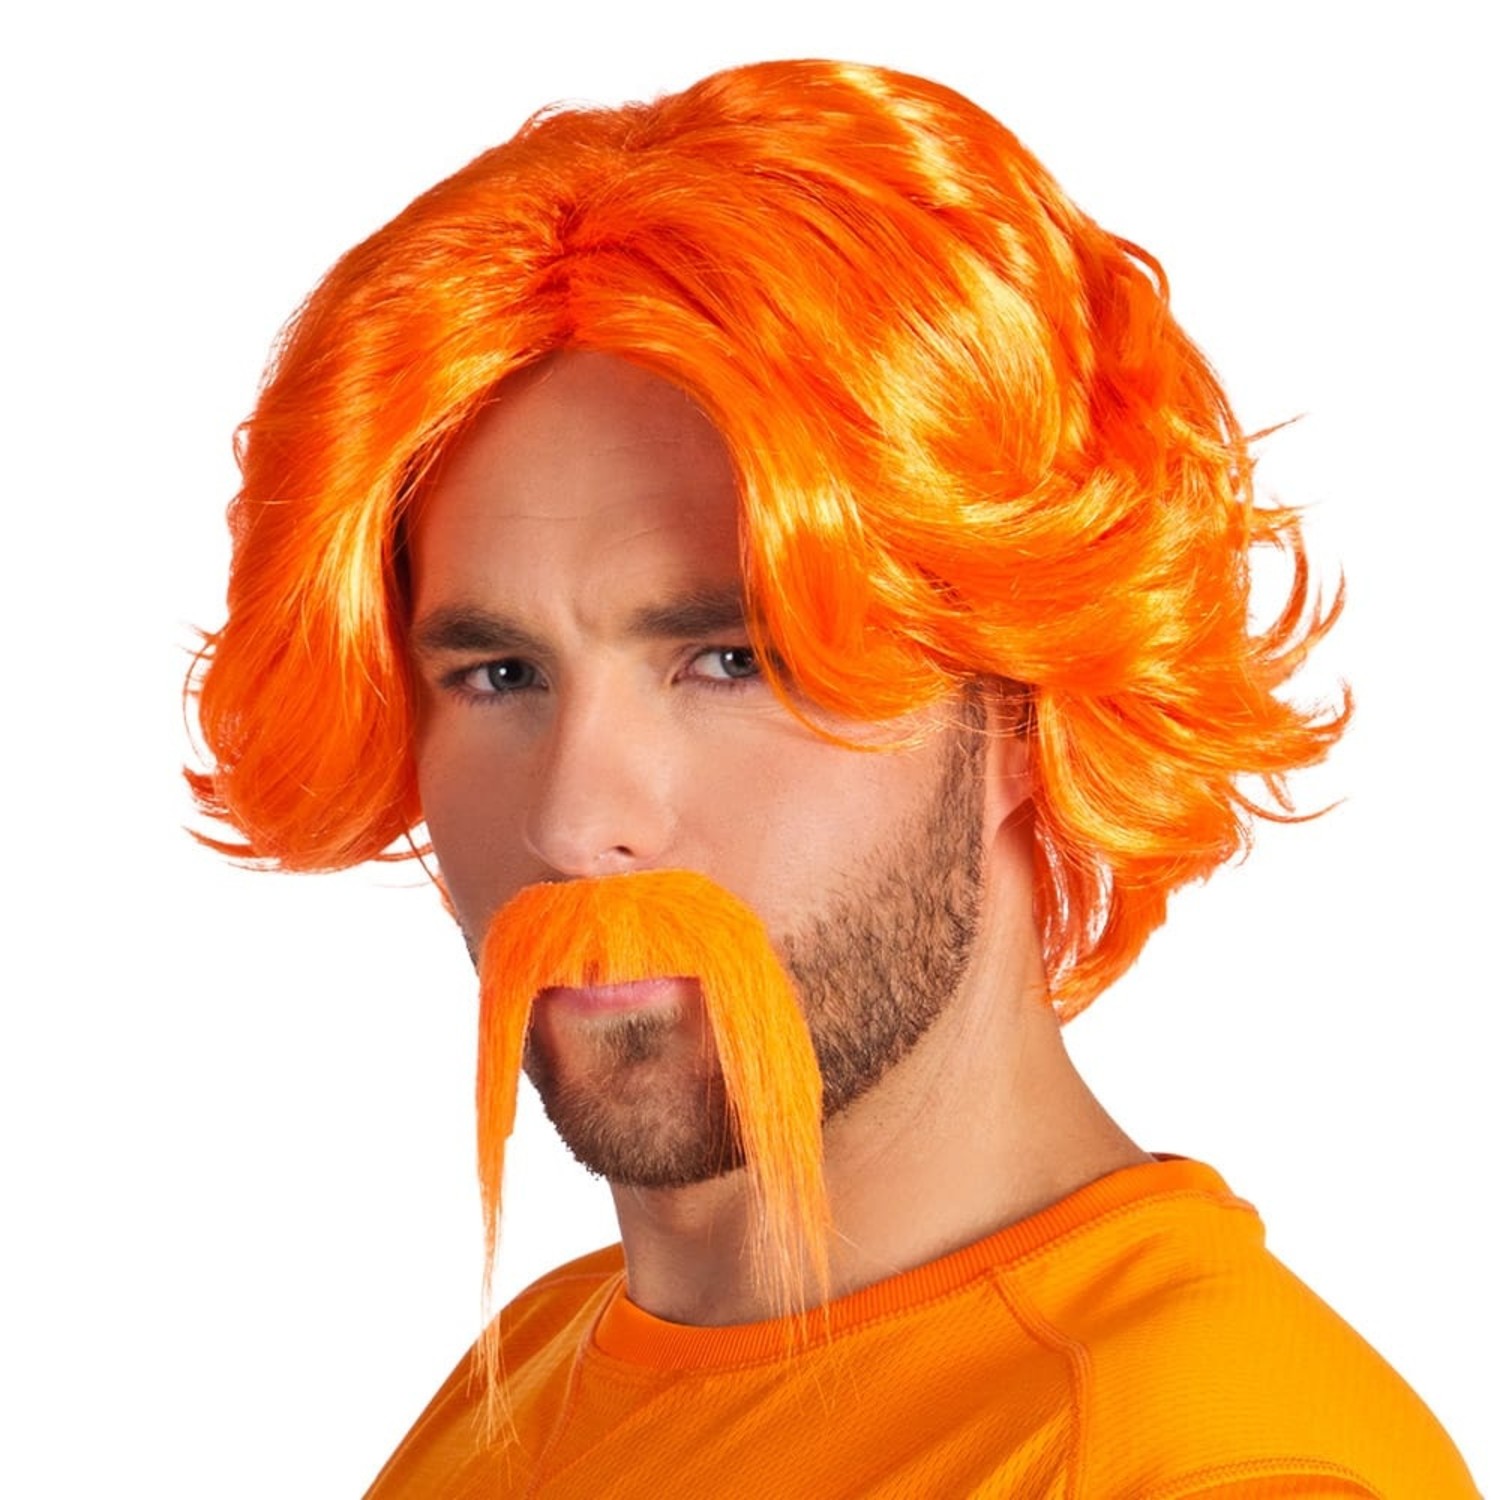 Pruik Oranje met Snor - Partylove.nl